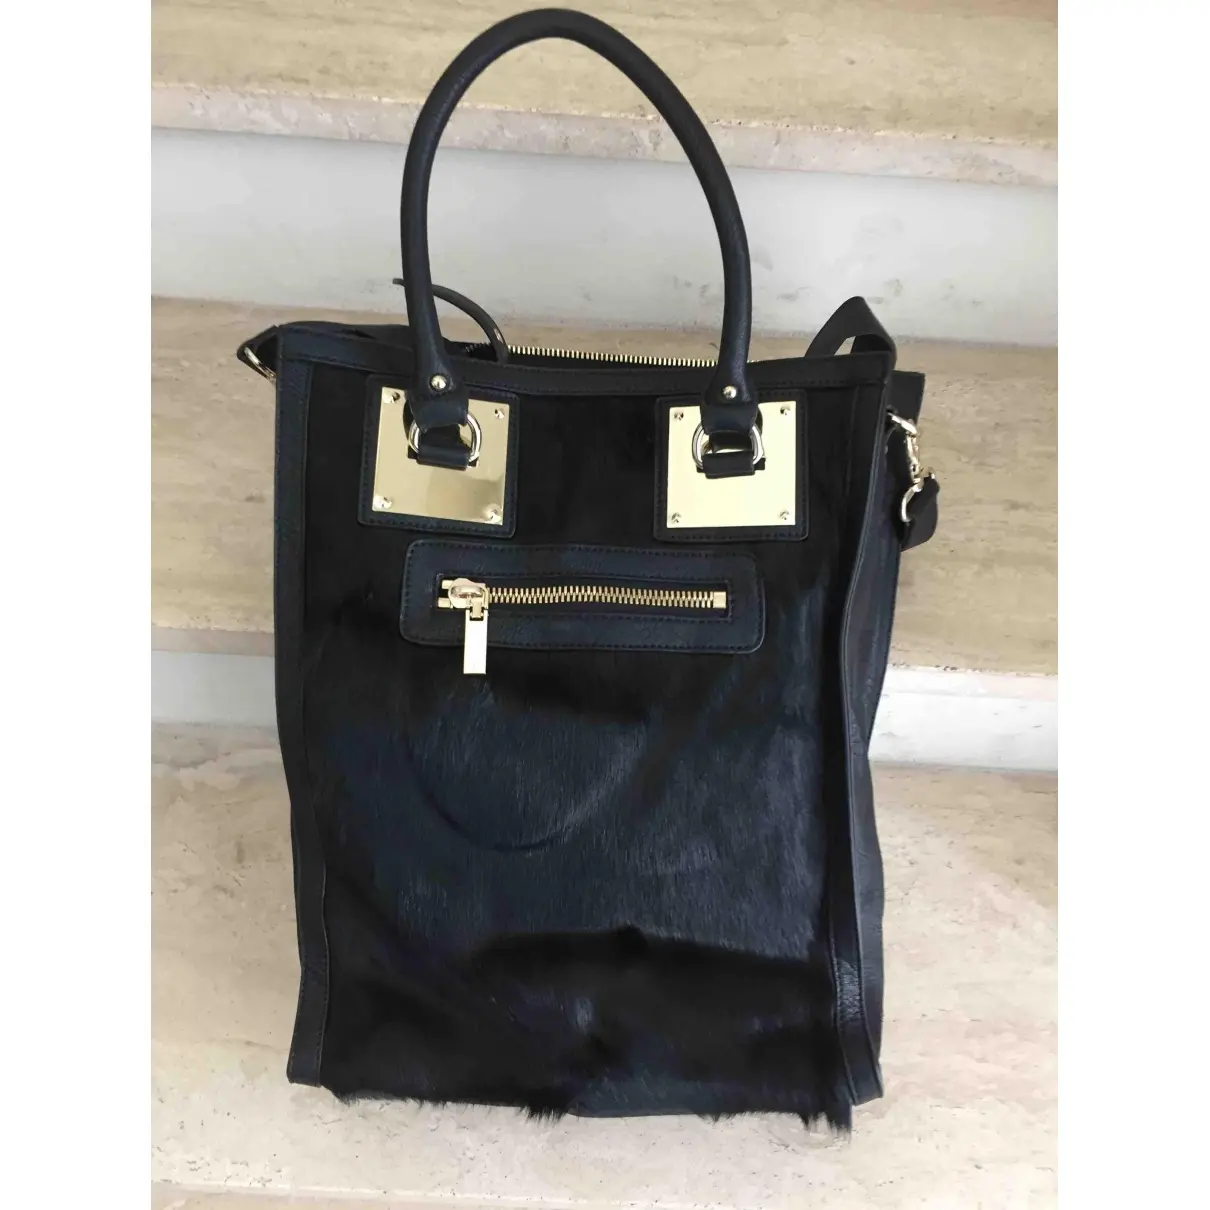 Mangano Leather handbag for sale